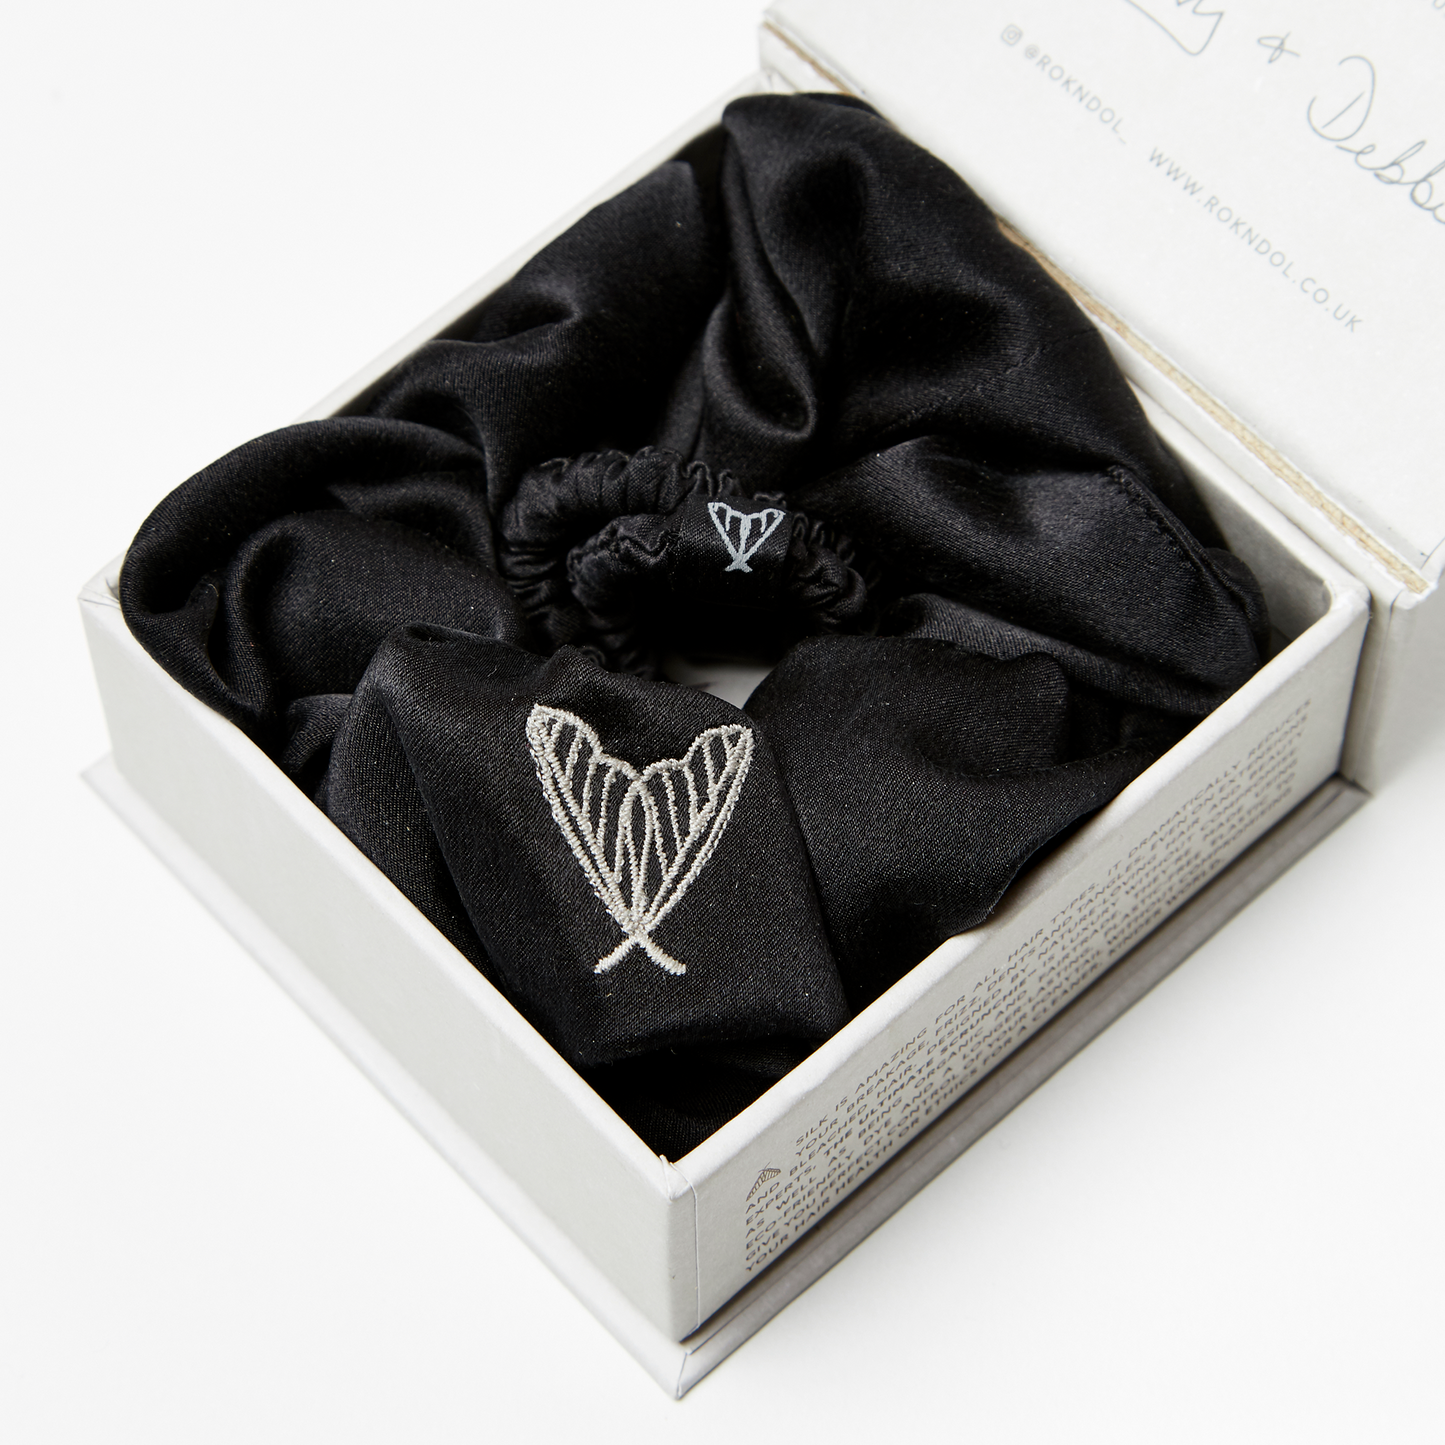 Large black silk scrunchie and narrow black silk hair tie in gift box